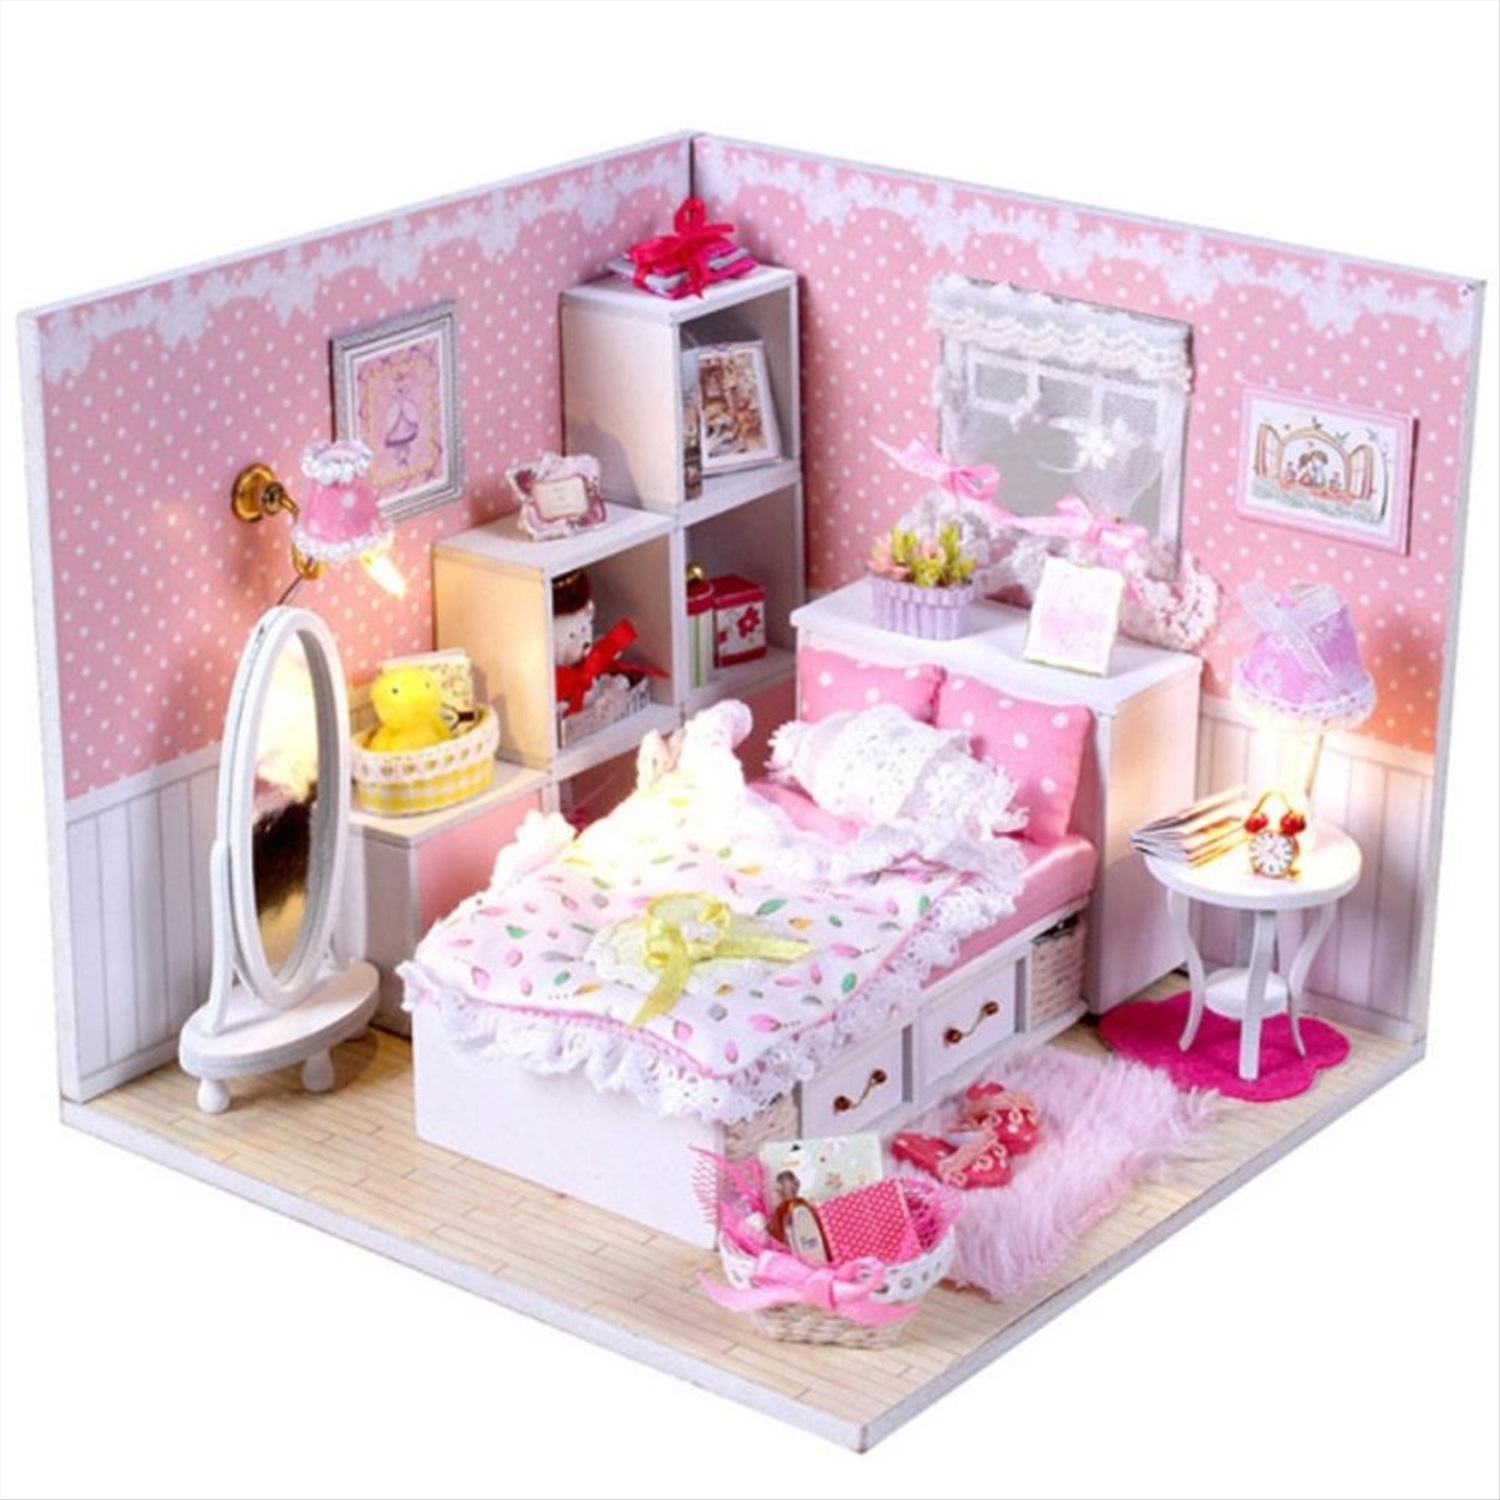 Mini House румбокс комната маленькой принцессы